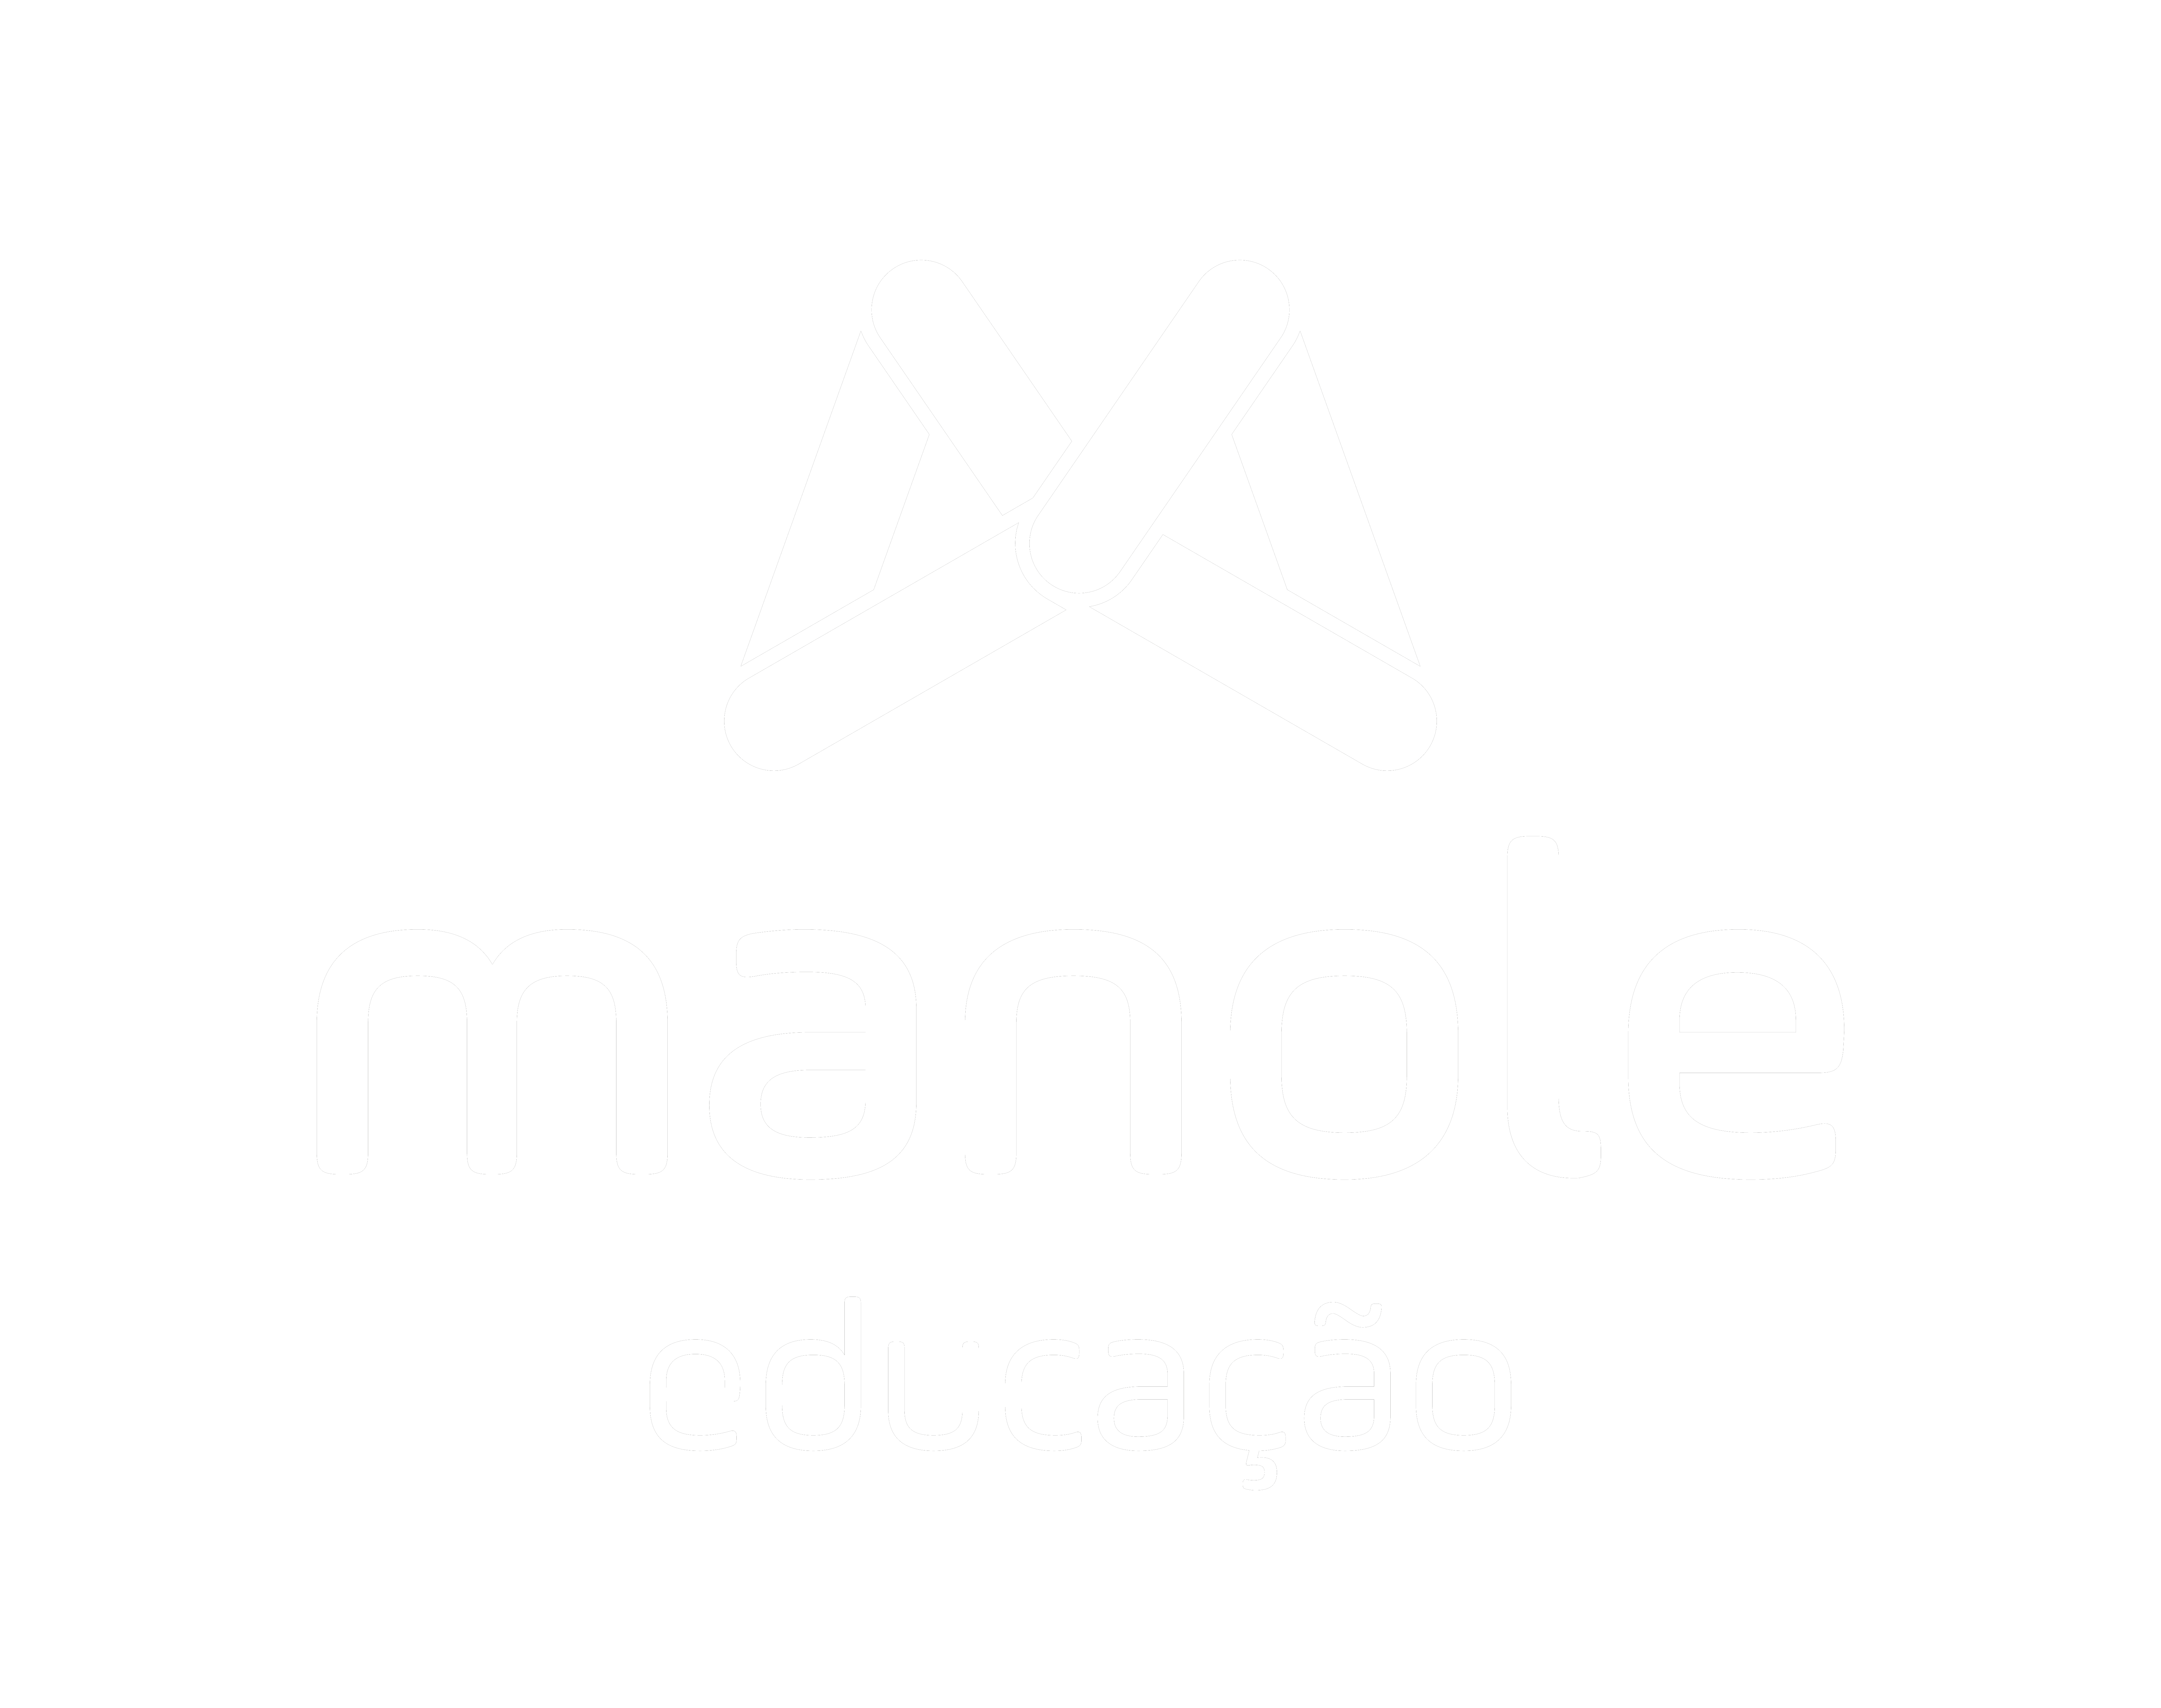 Manole